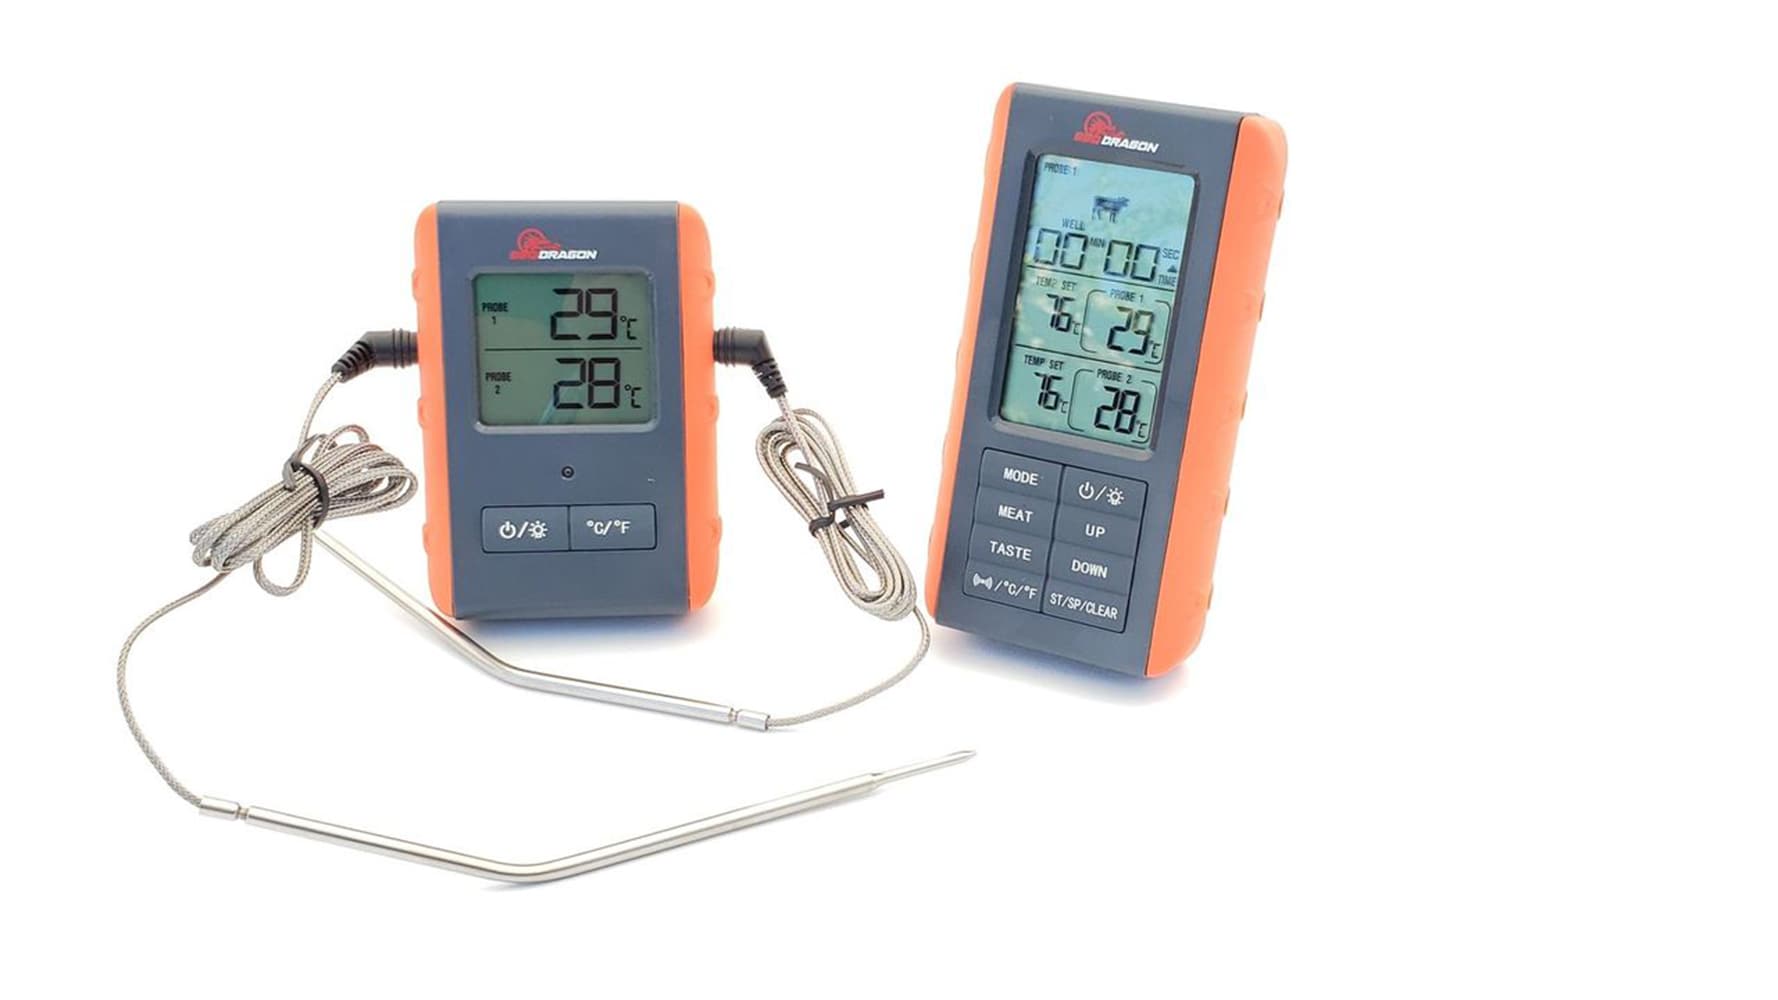 BBQ Dragon Wireless meat thermometer Digital Remote Meat Thermometer in the Meat  Thermometers department at